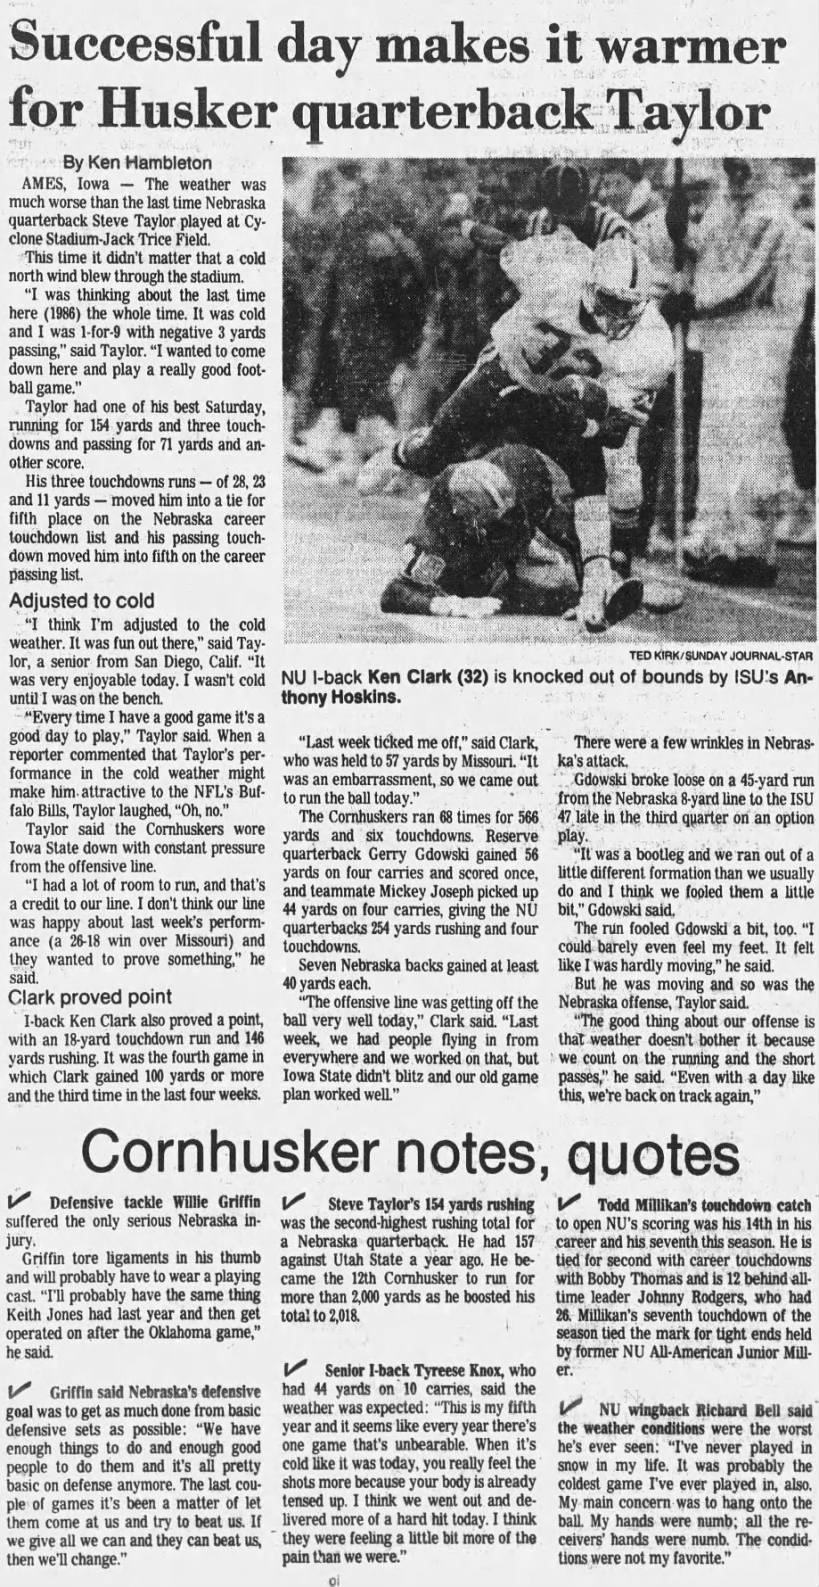 1988 Nebraska-Iowa State offense